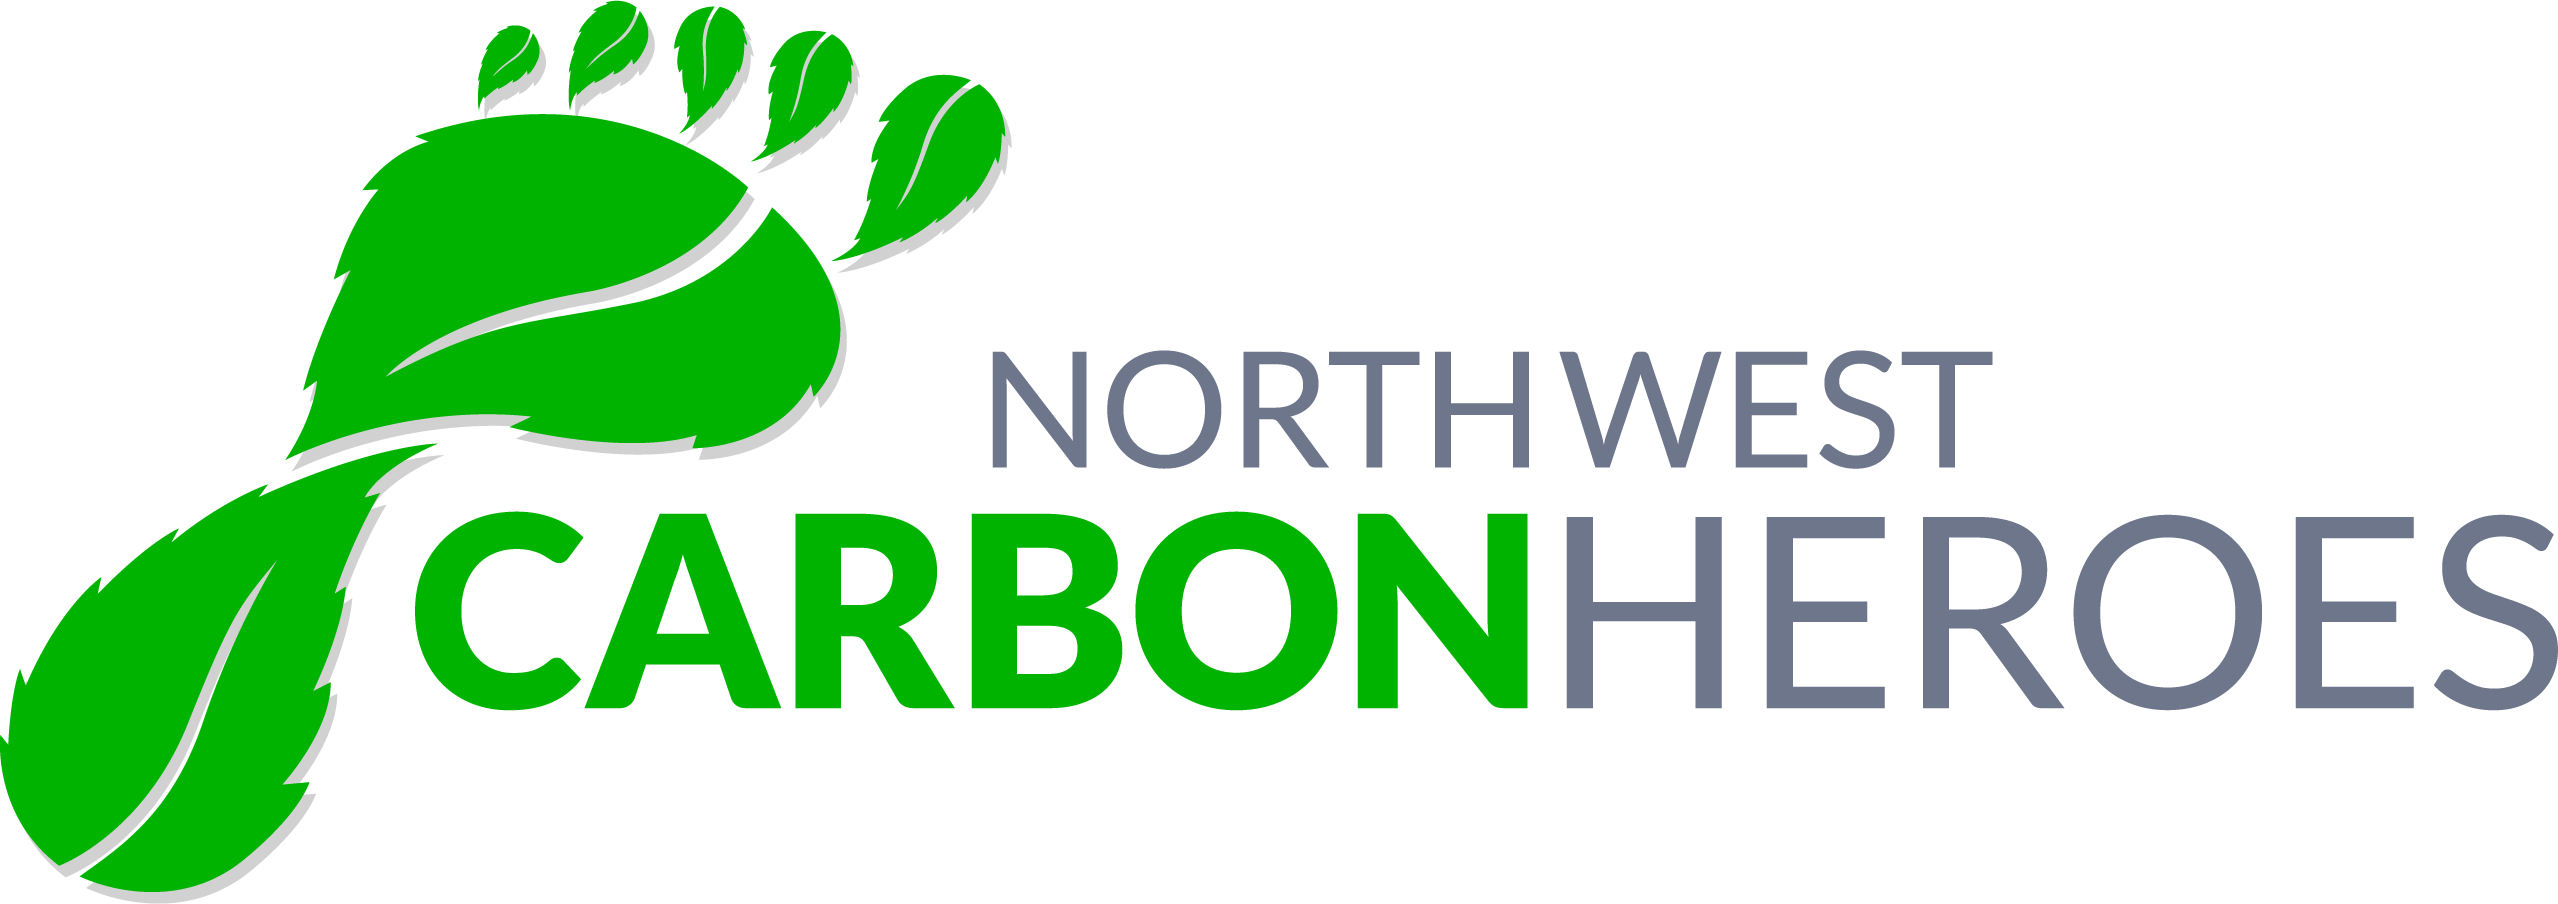 thumbnail NorthWest Carbon Hero RGB NEW